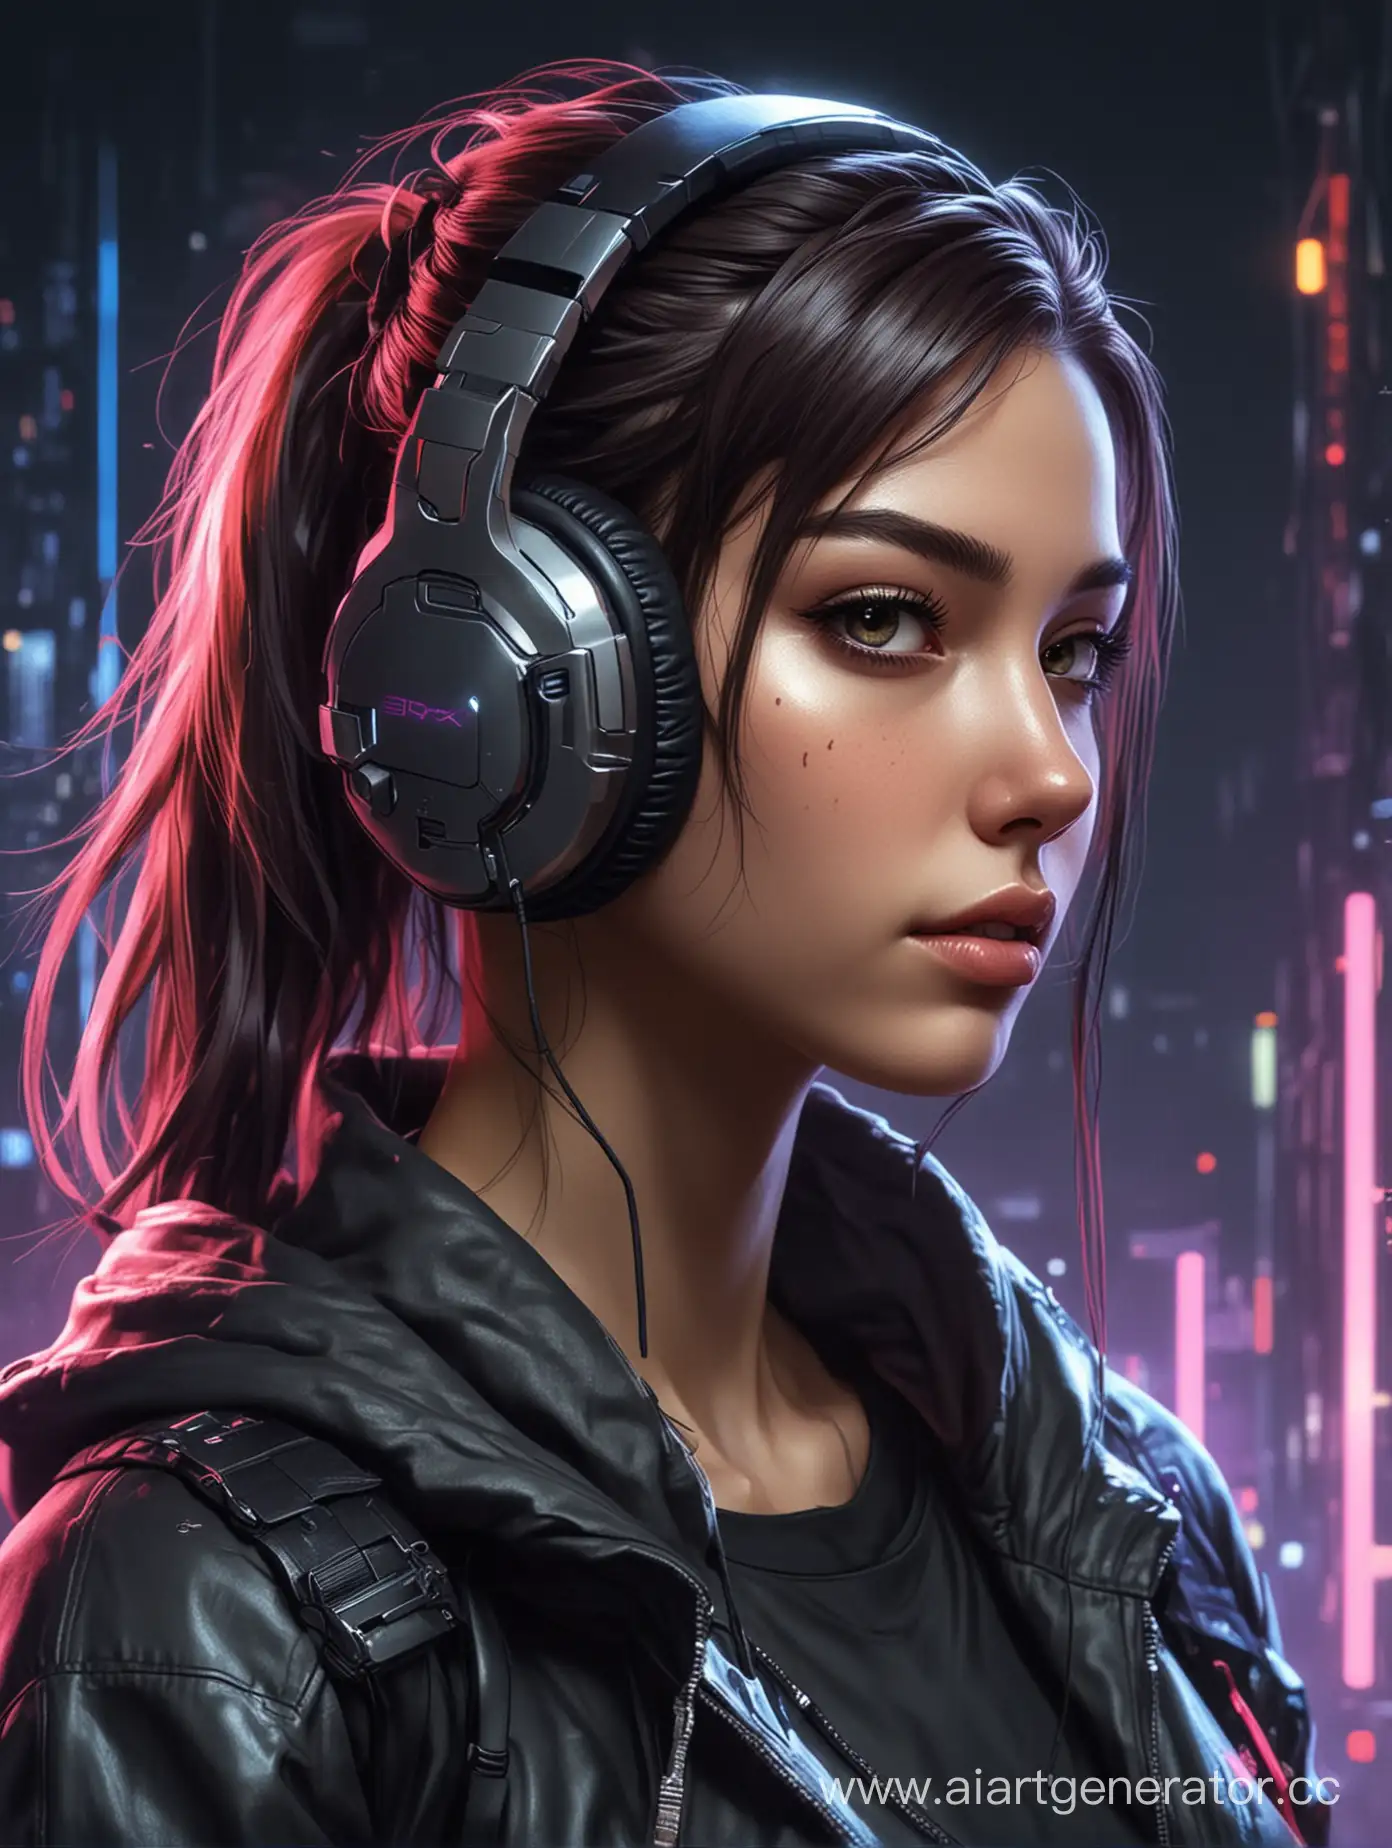 Cyberpunk-Girl-Listening-to-Music-with-Headphones